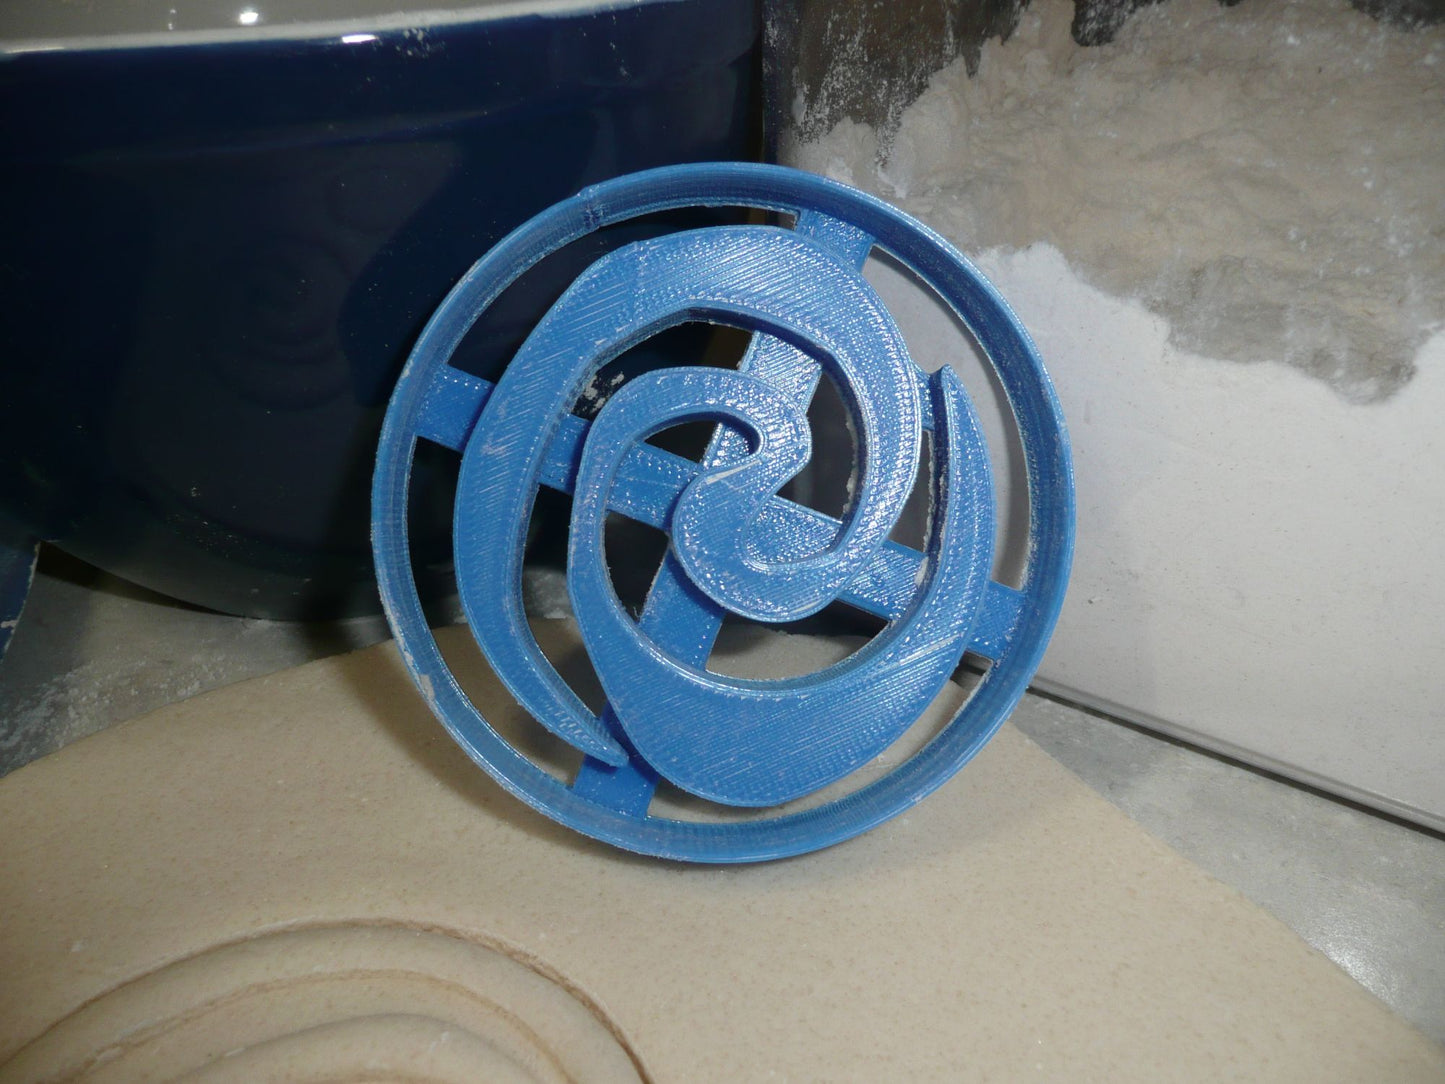 Spiral Swirl Symbol from Moana Kids Animated Movie Cookie Cutter USA PR2658